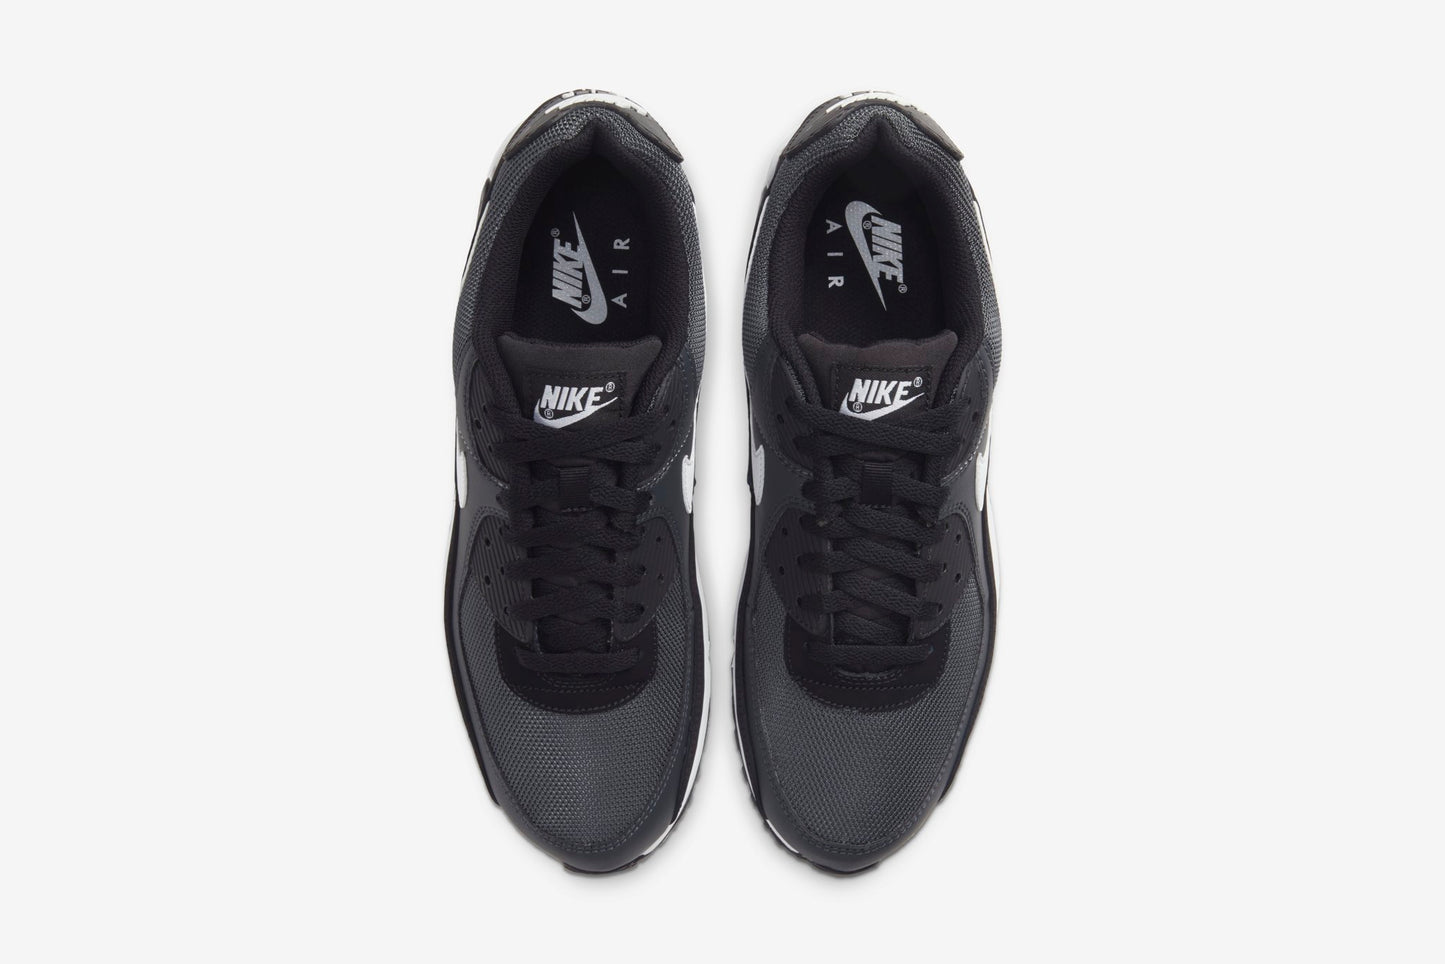 Nike "Air Max 90" M - Iron Grey / White / Dark Smoke Grey